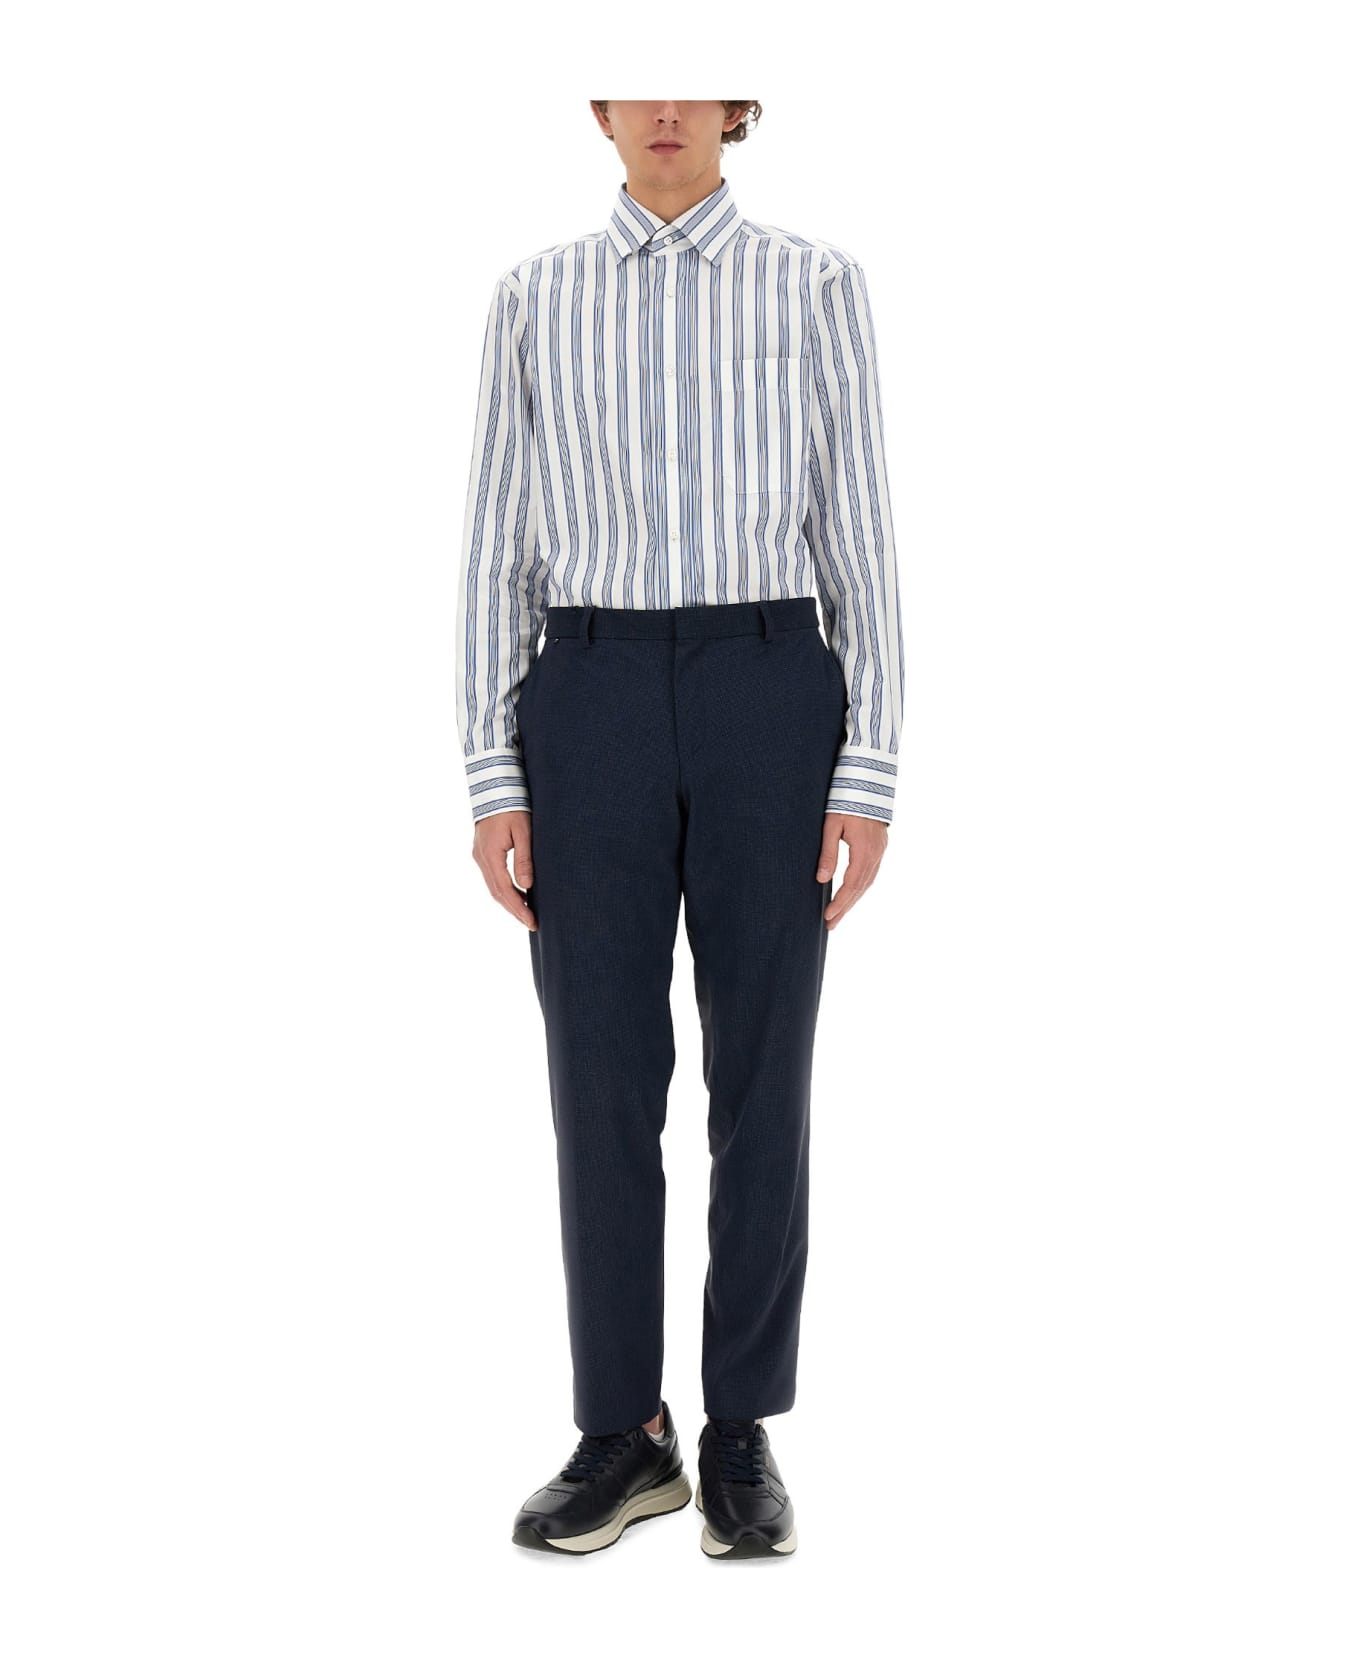 Hugo Boss Shirt With Stripe Pattern - BABY BLUE シャツ